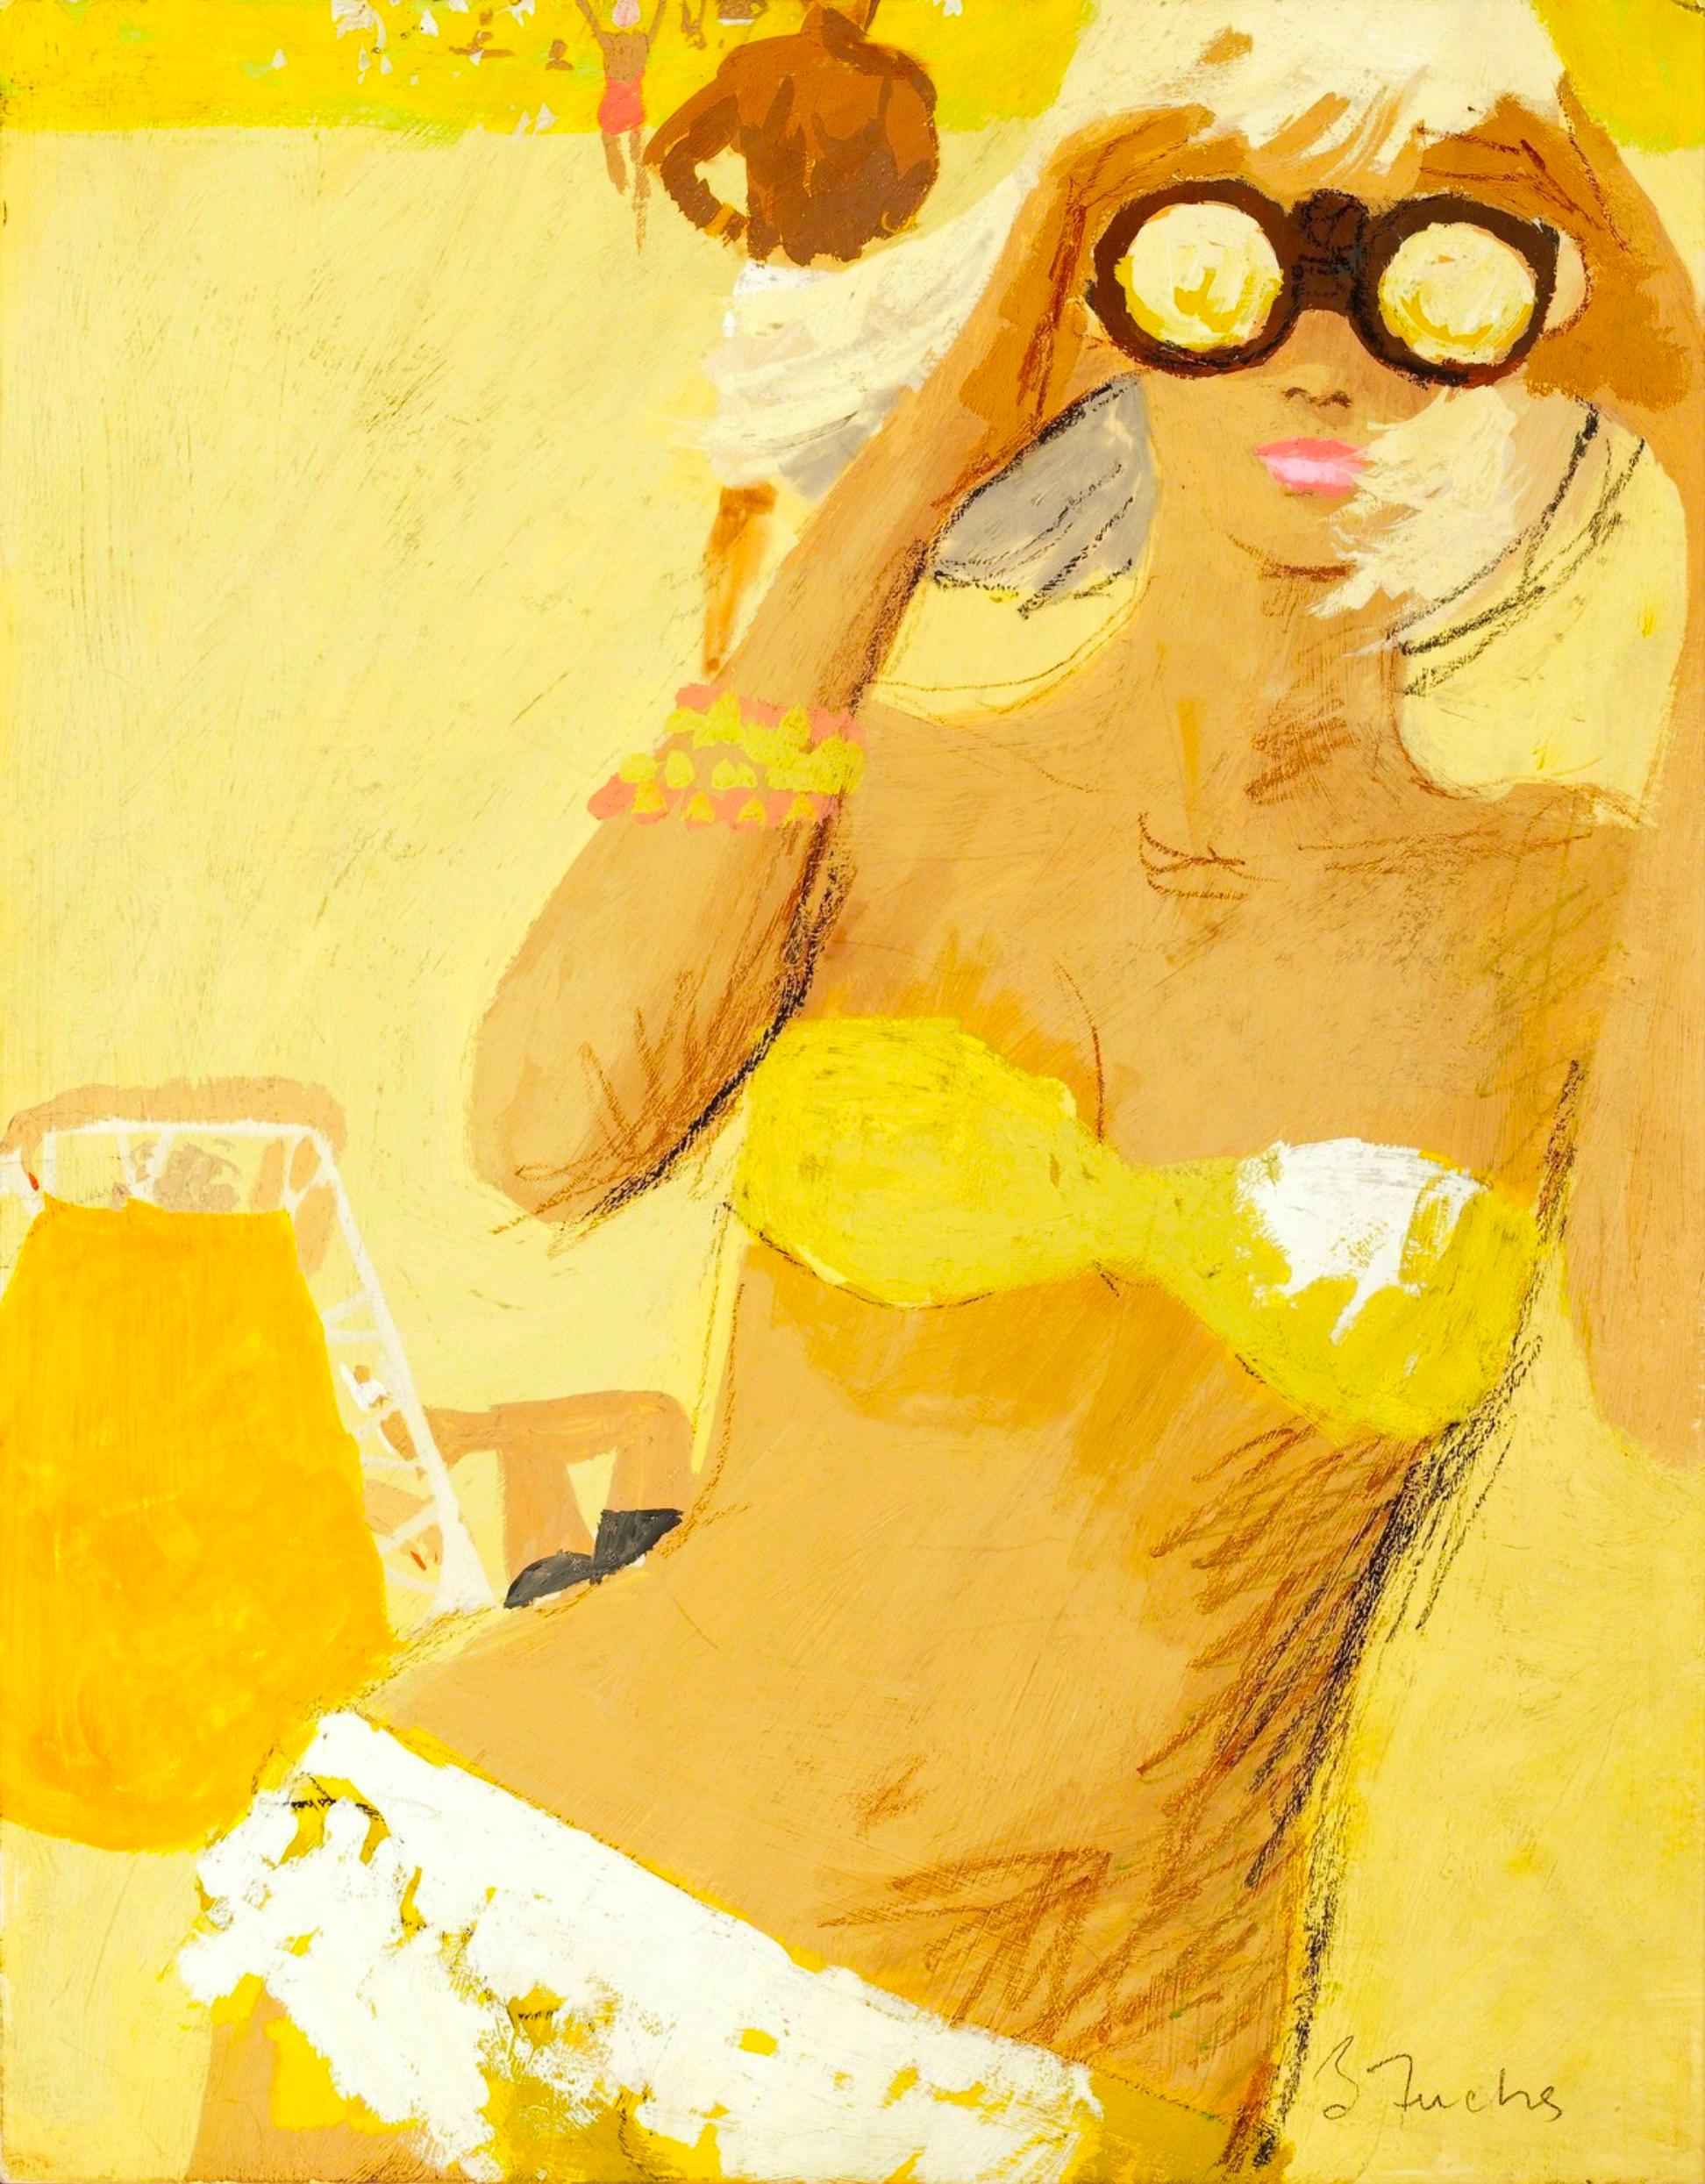 Retro Blond Girl in Yellow with Binoculars at the beach